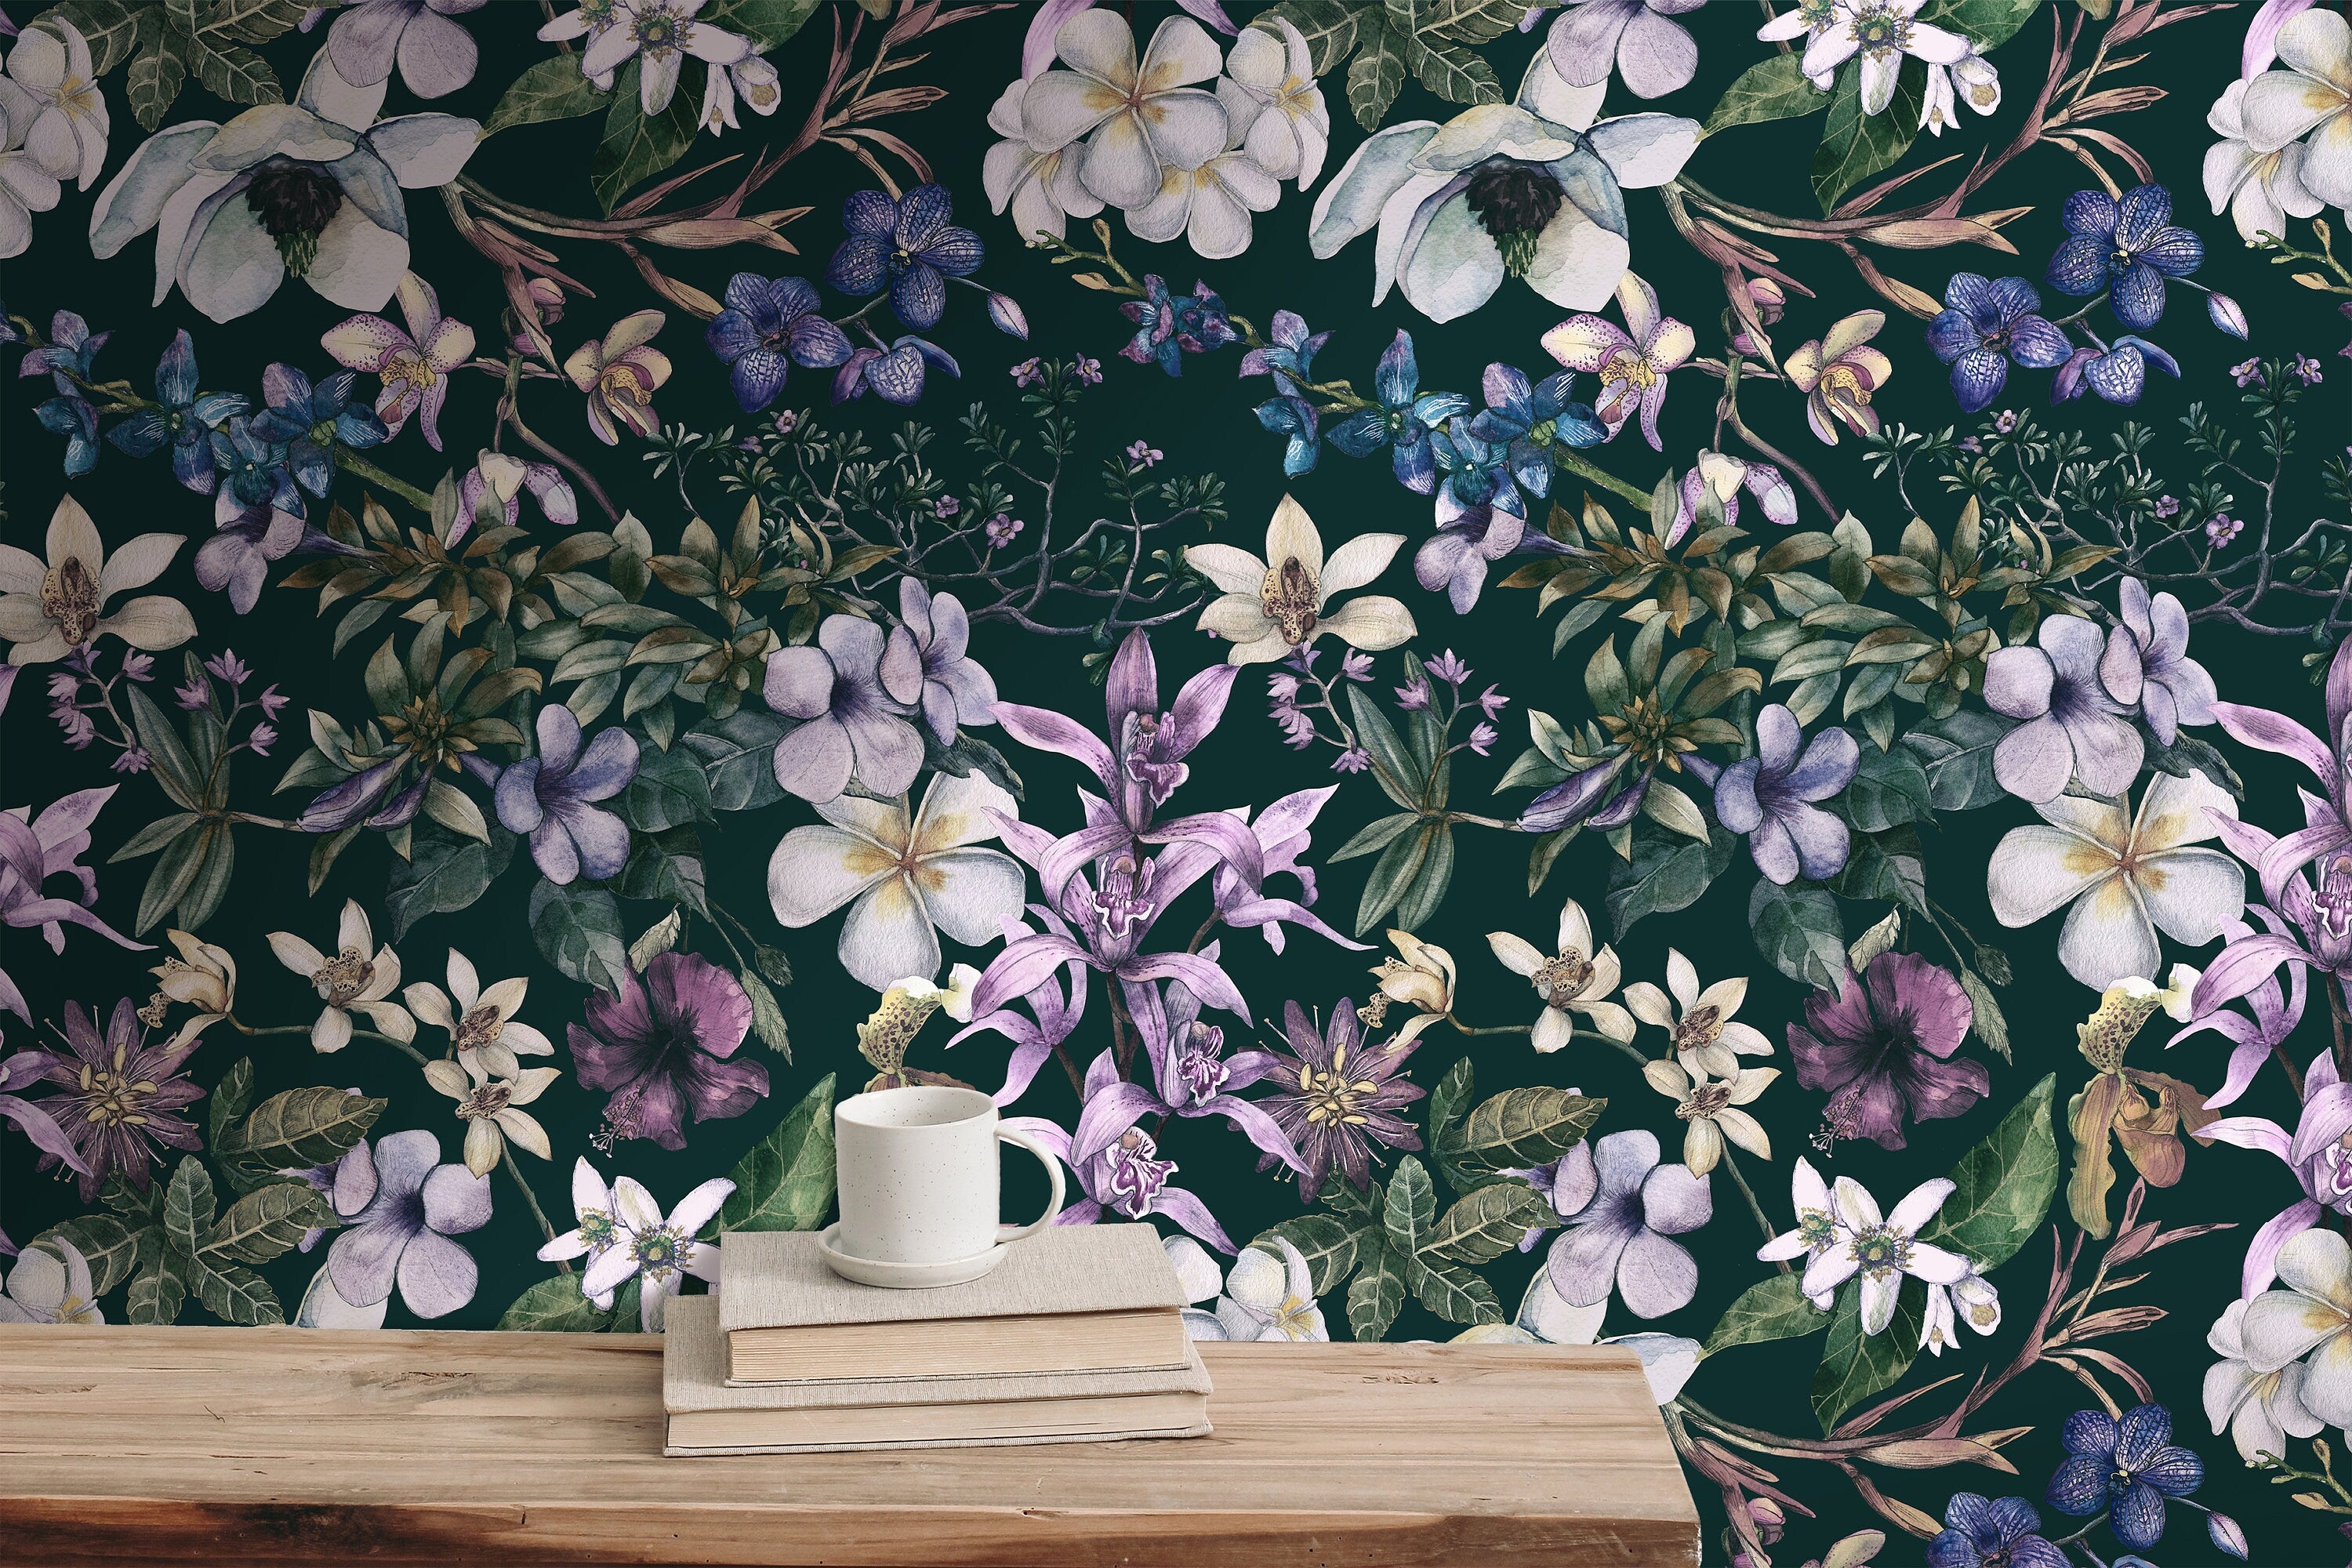 Removable Wallpaper Large Dark Floral Wallpaper | Peel And Stick Wallpaper | Adhesive Wallpaper | Wall Paper Peel Stick Wall Mural 3497 - JamesAndColors